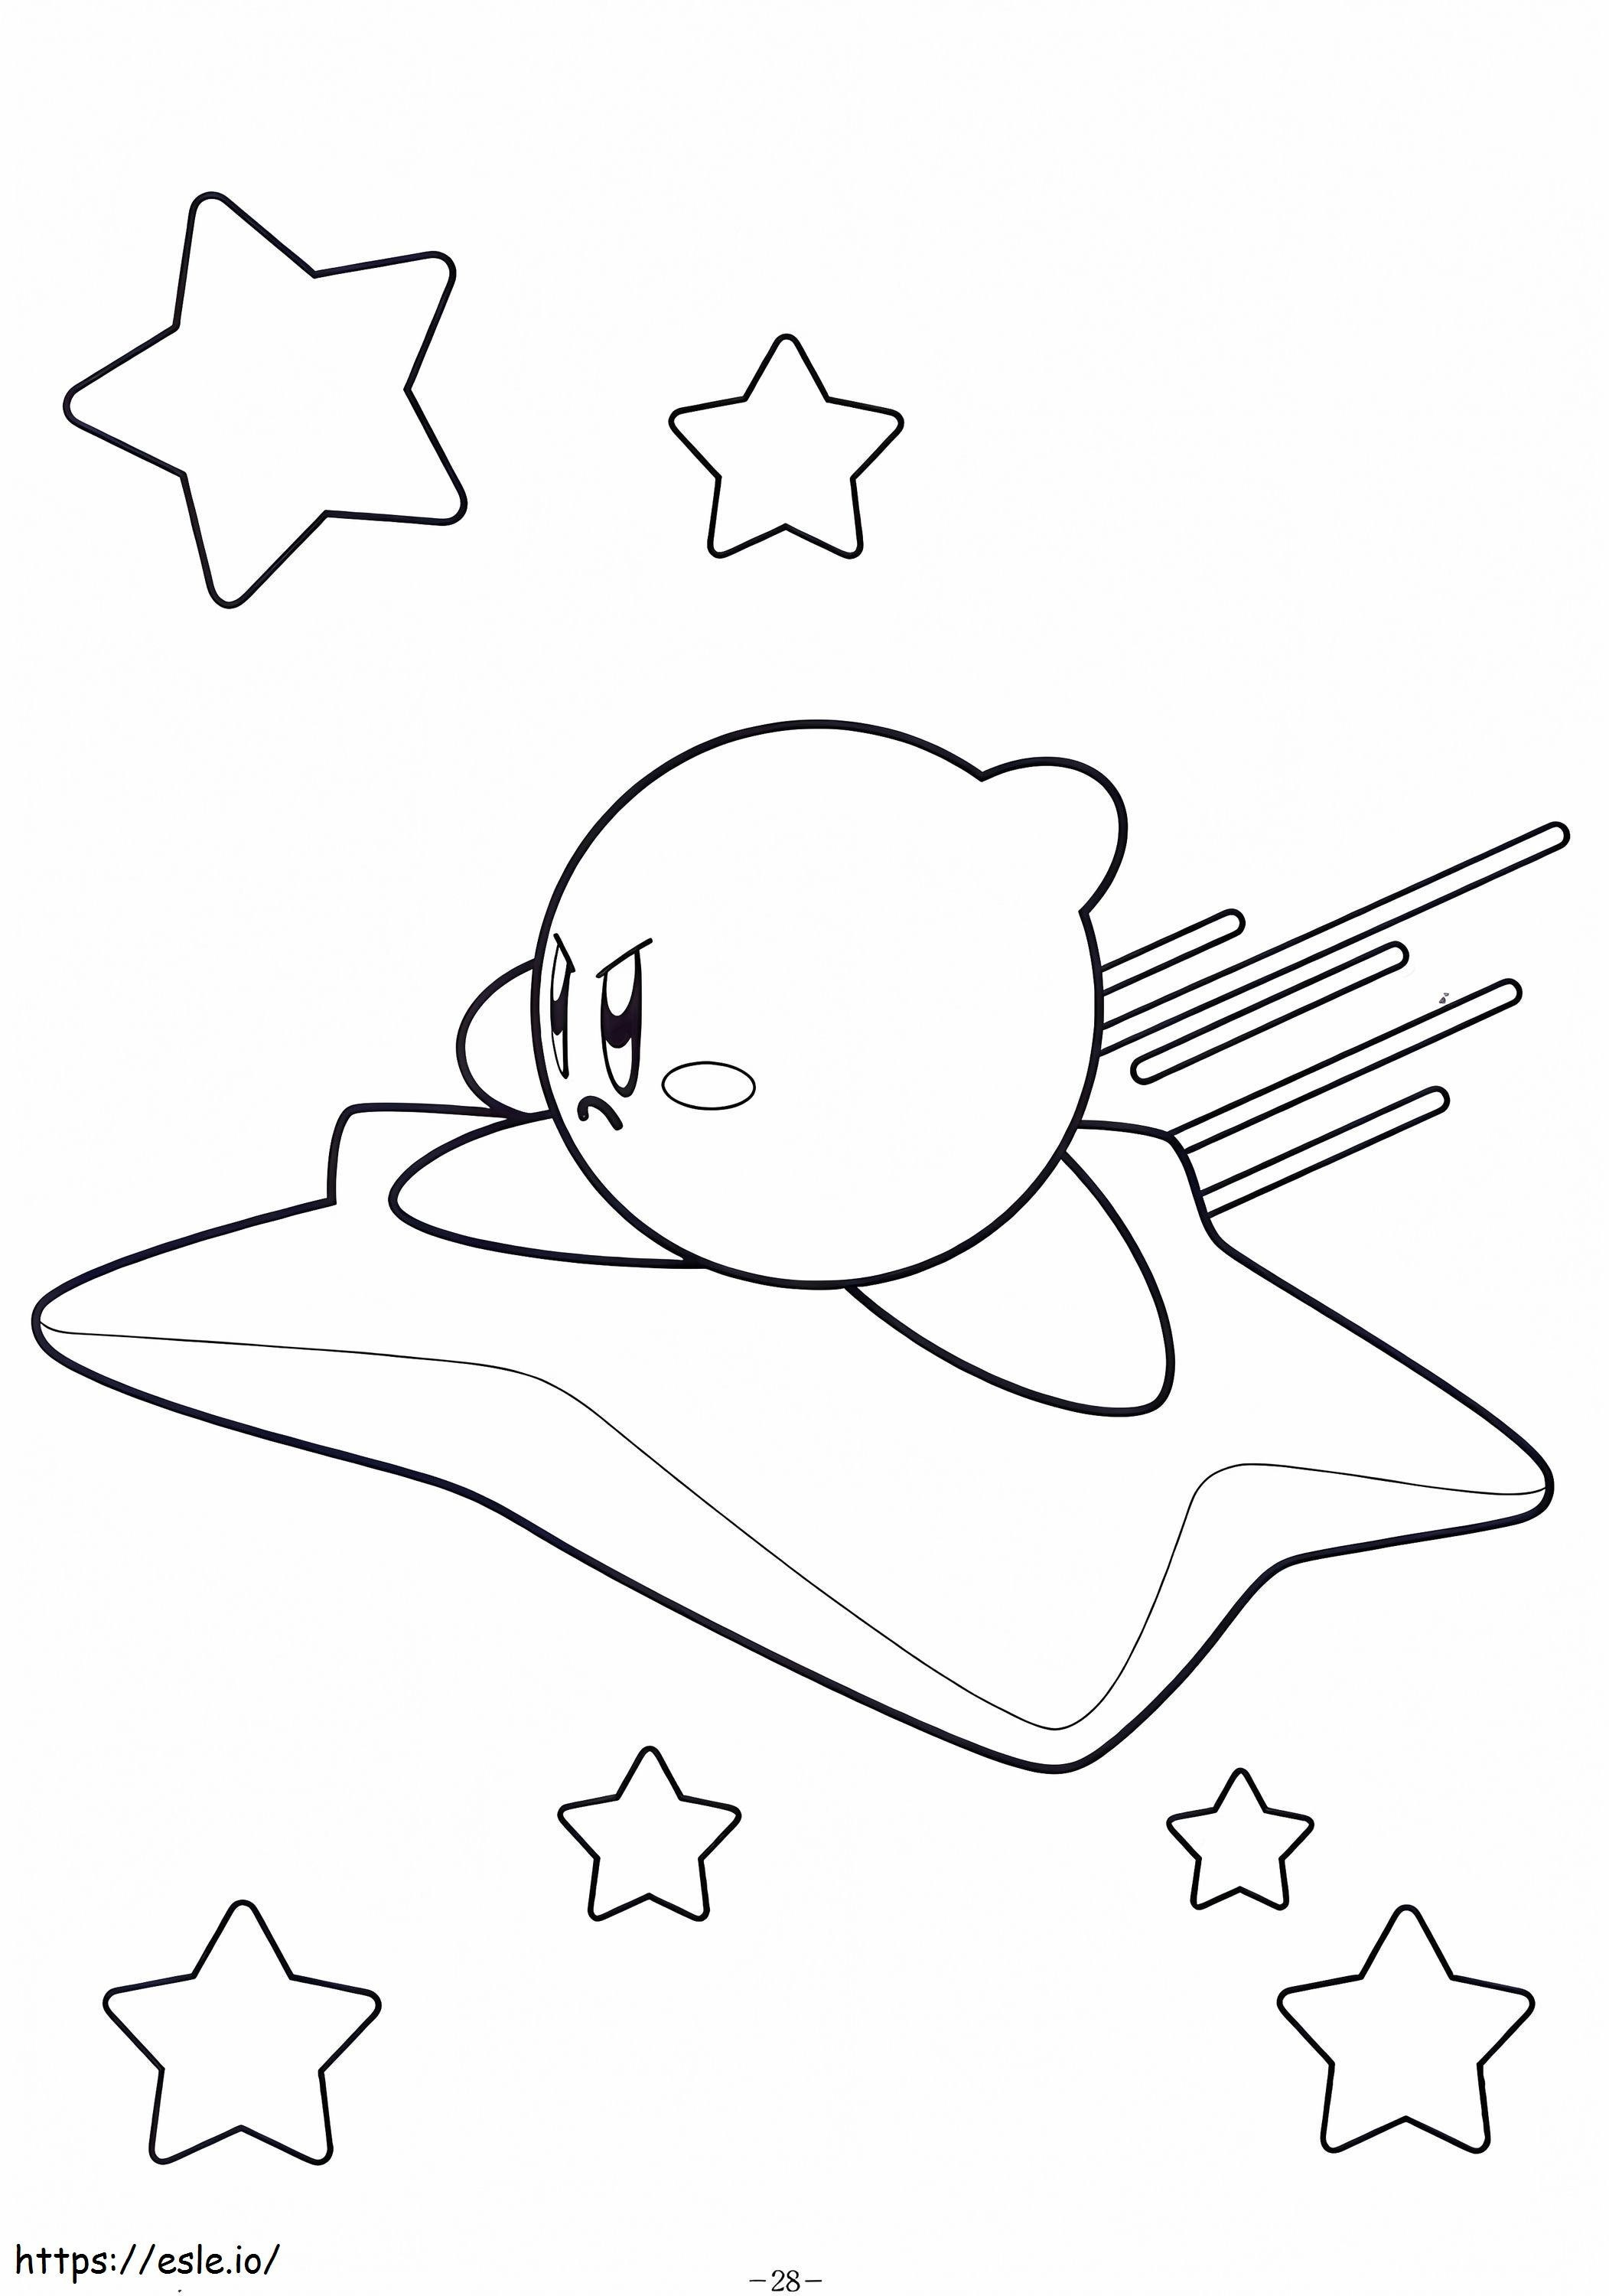 1575687693 Batang Bintang Kirby Gambar Mewarnai